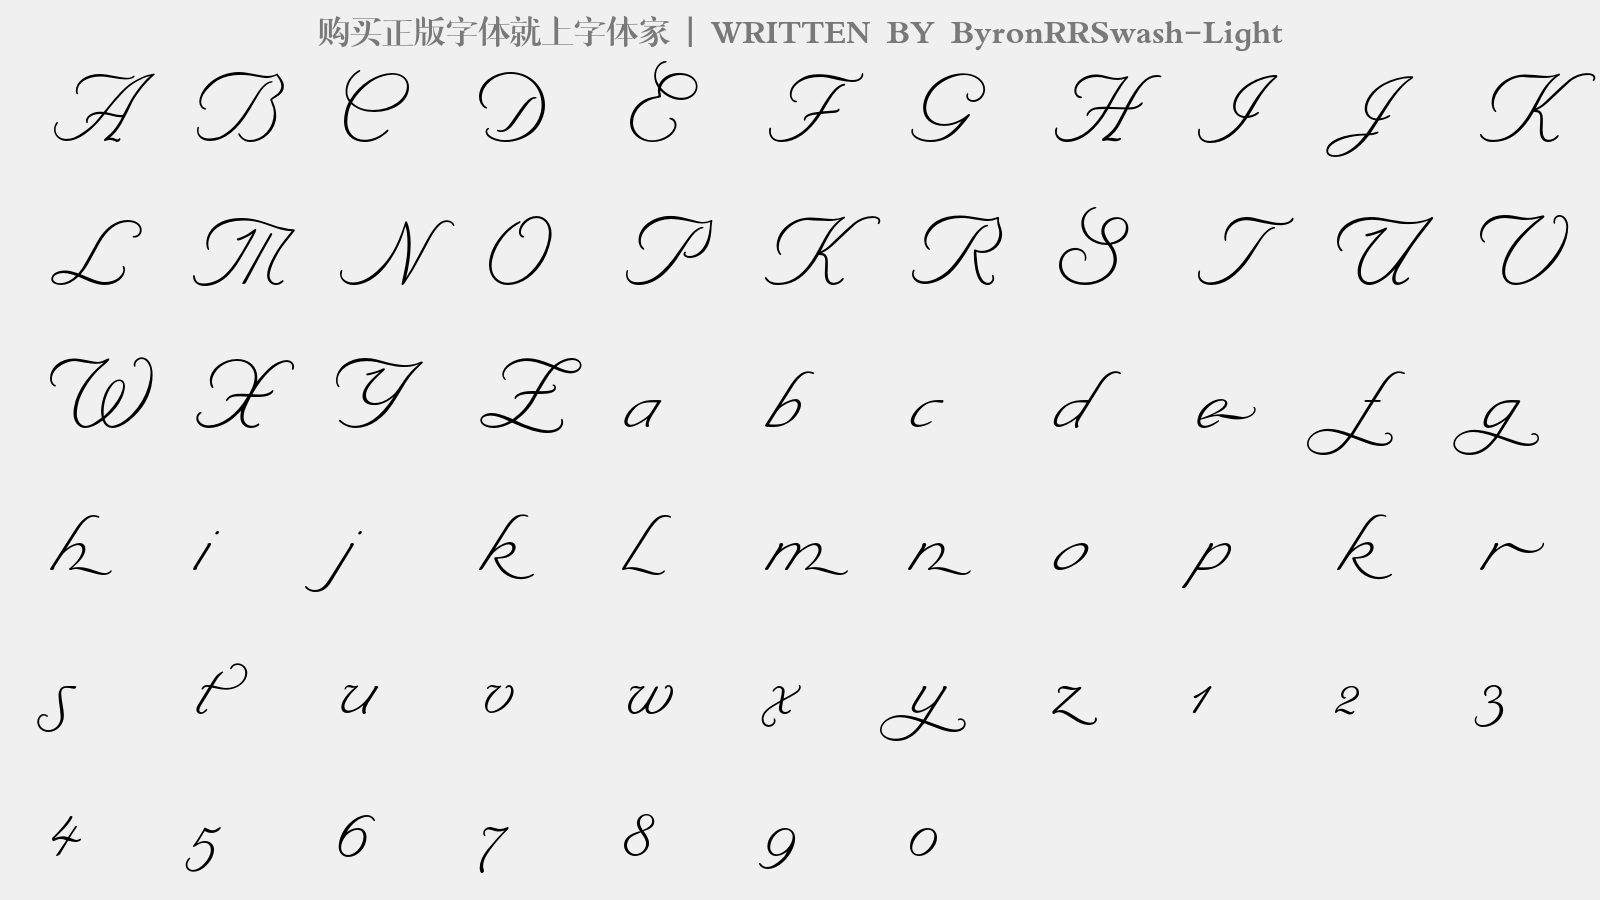 ByronRRSwash-Light - 大写字母/小写字母/数字